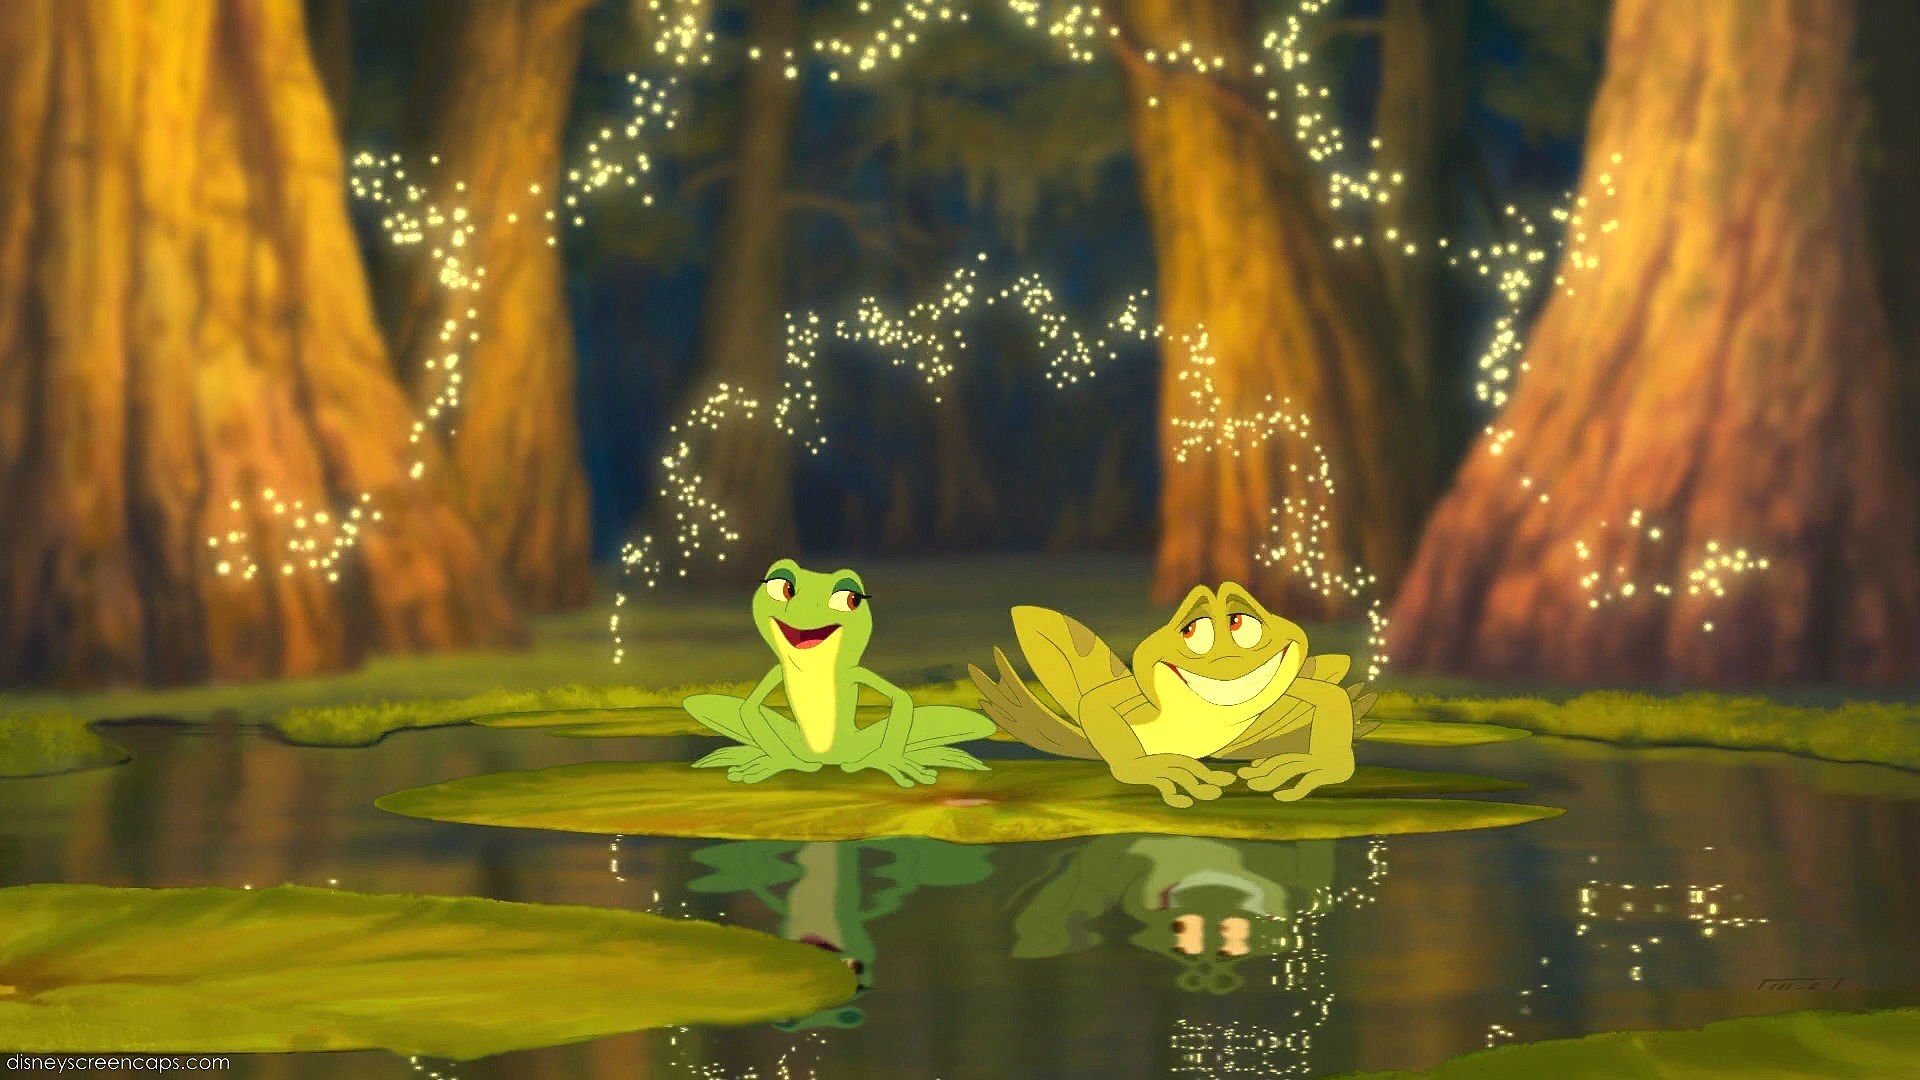 Princess and the Frog, Fantasy romance, Musical animation, Desktop backgrounds, 1920x1080 Full HD Desktop